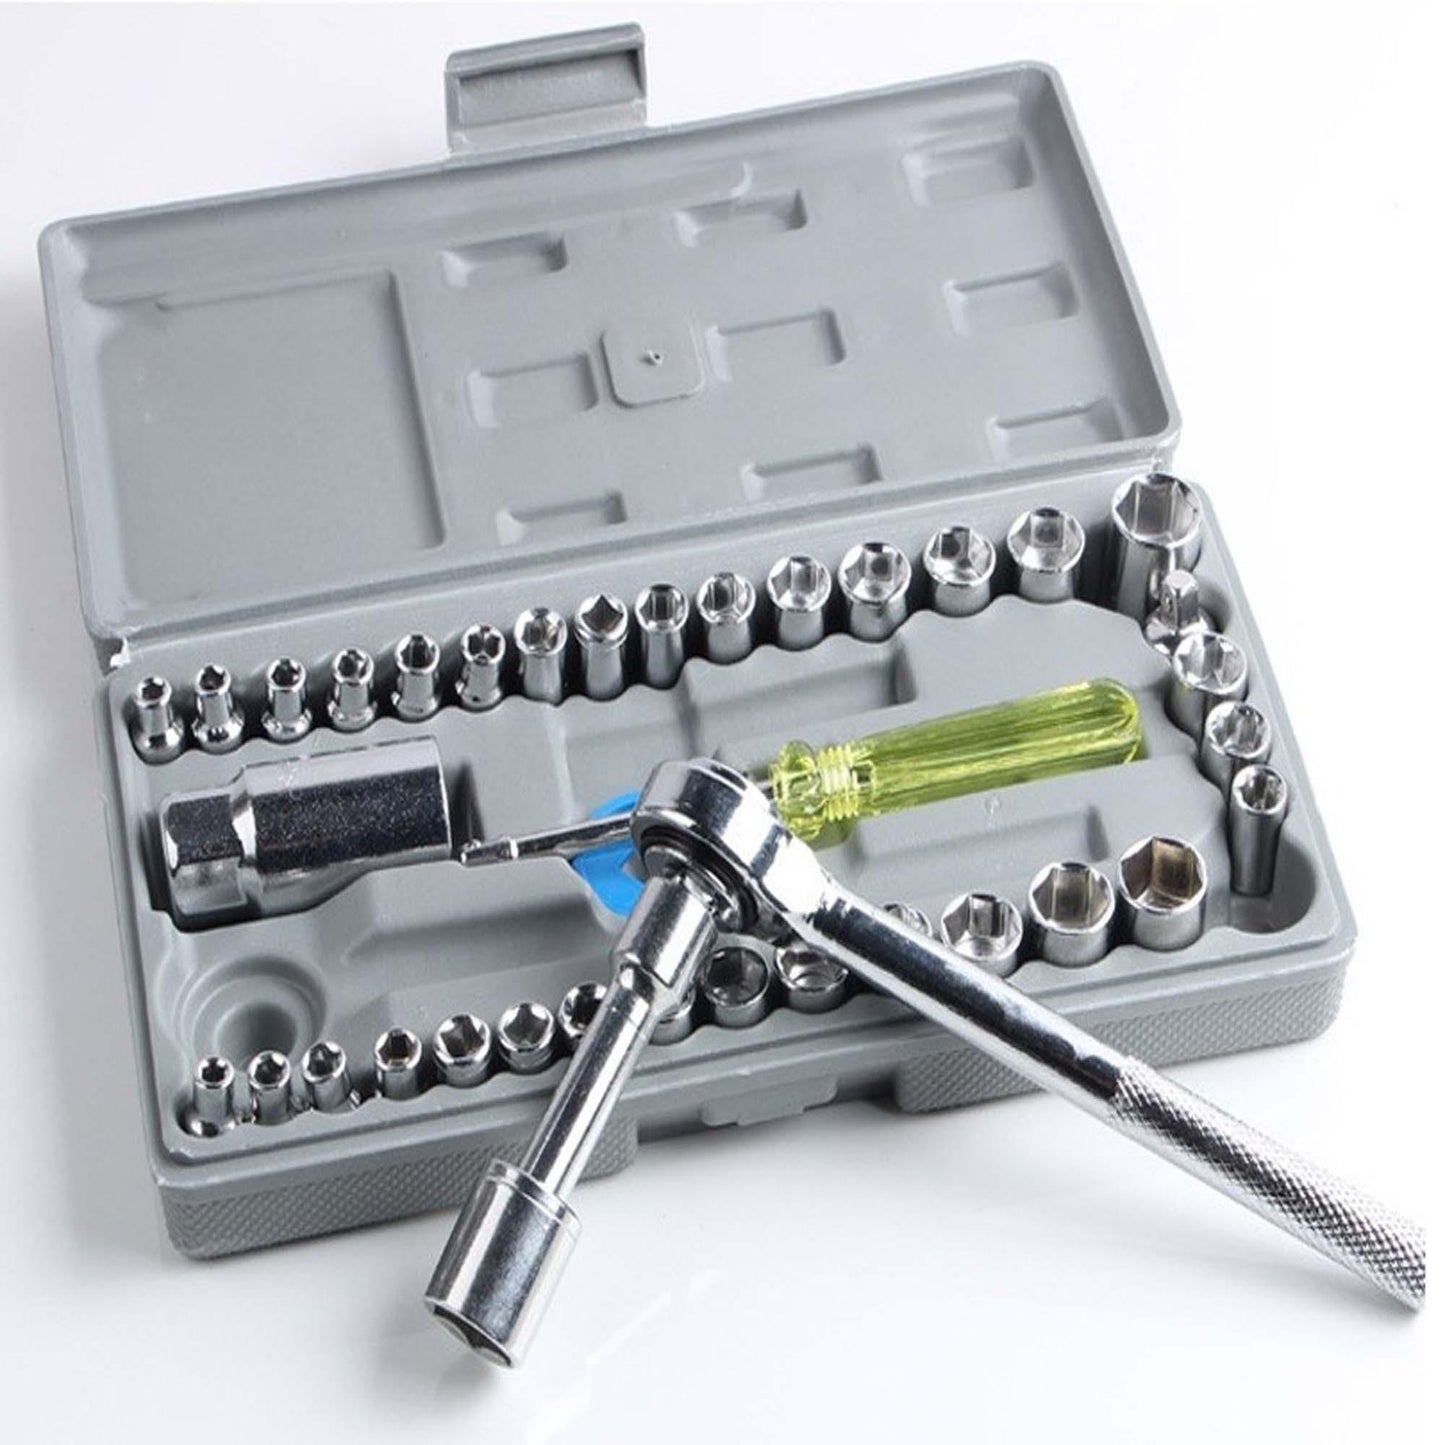 Original Aiwa 40 Piece Toolkit Tool kit Combination Socket Ratchet Wrench Set Tool Kit